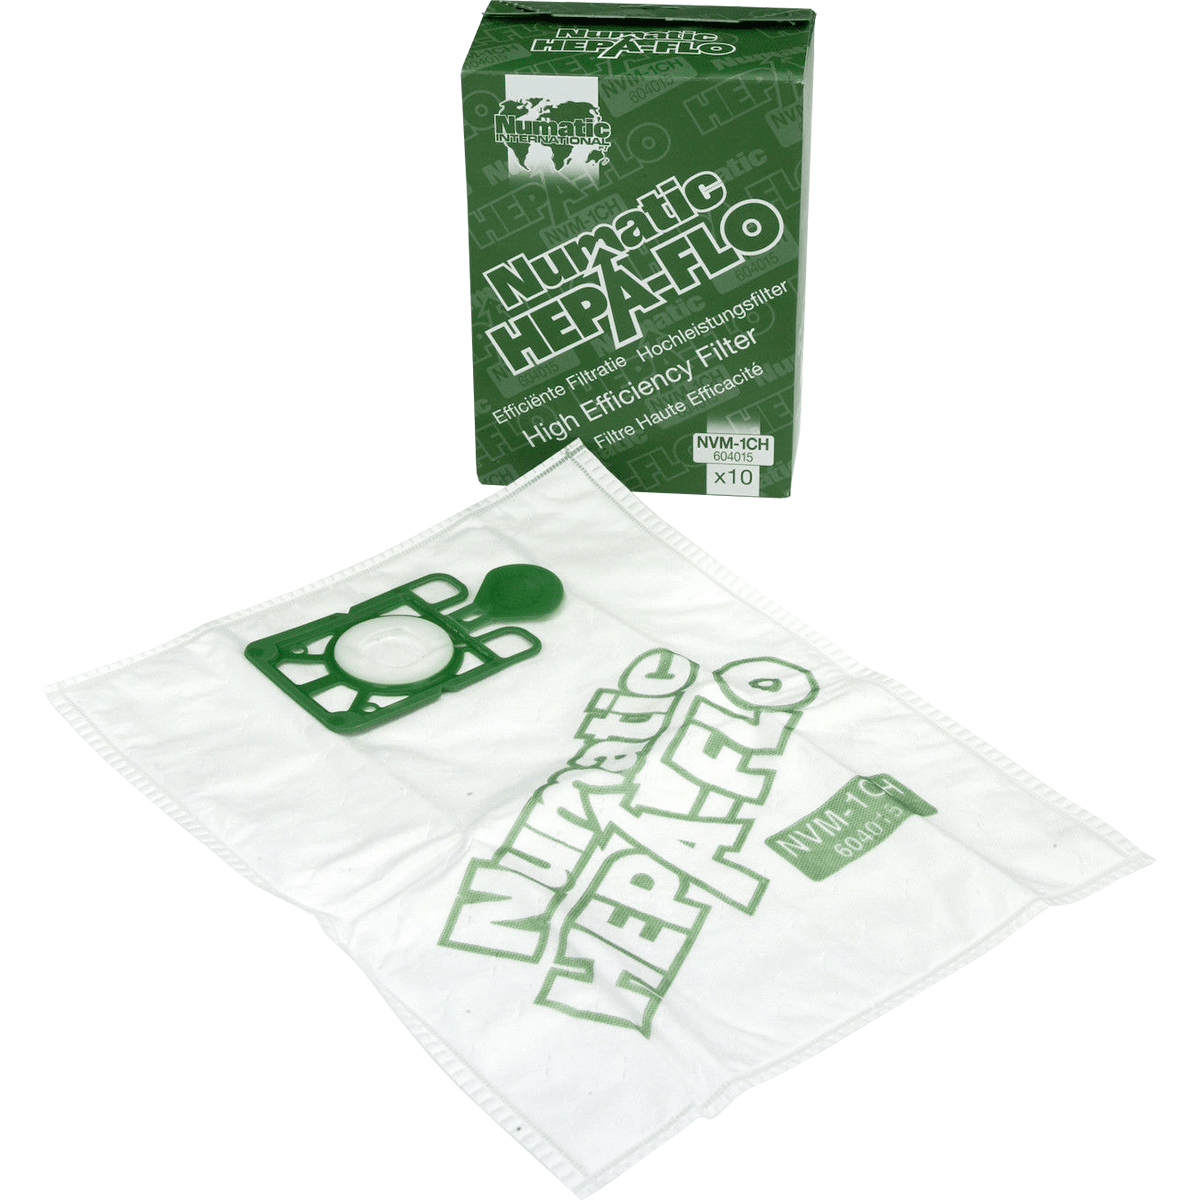 NaceCare HEPA Flo filter bags for NBV 240/290 10-Pack